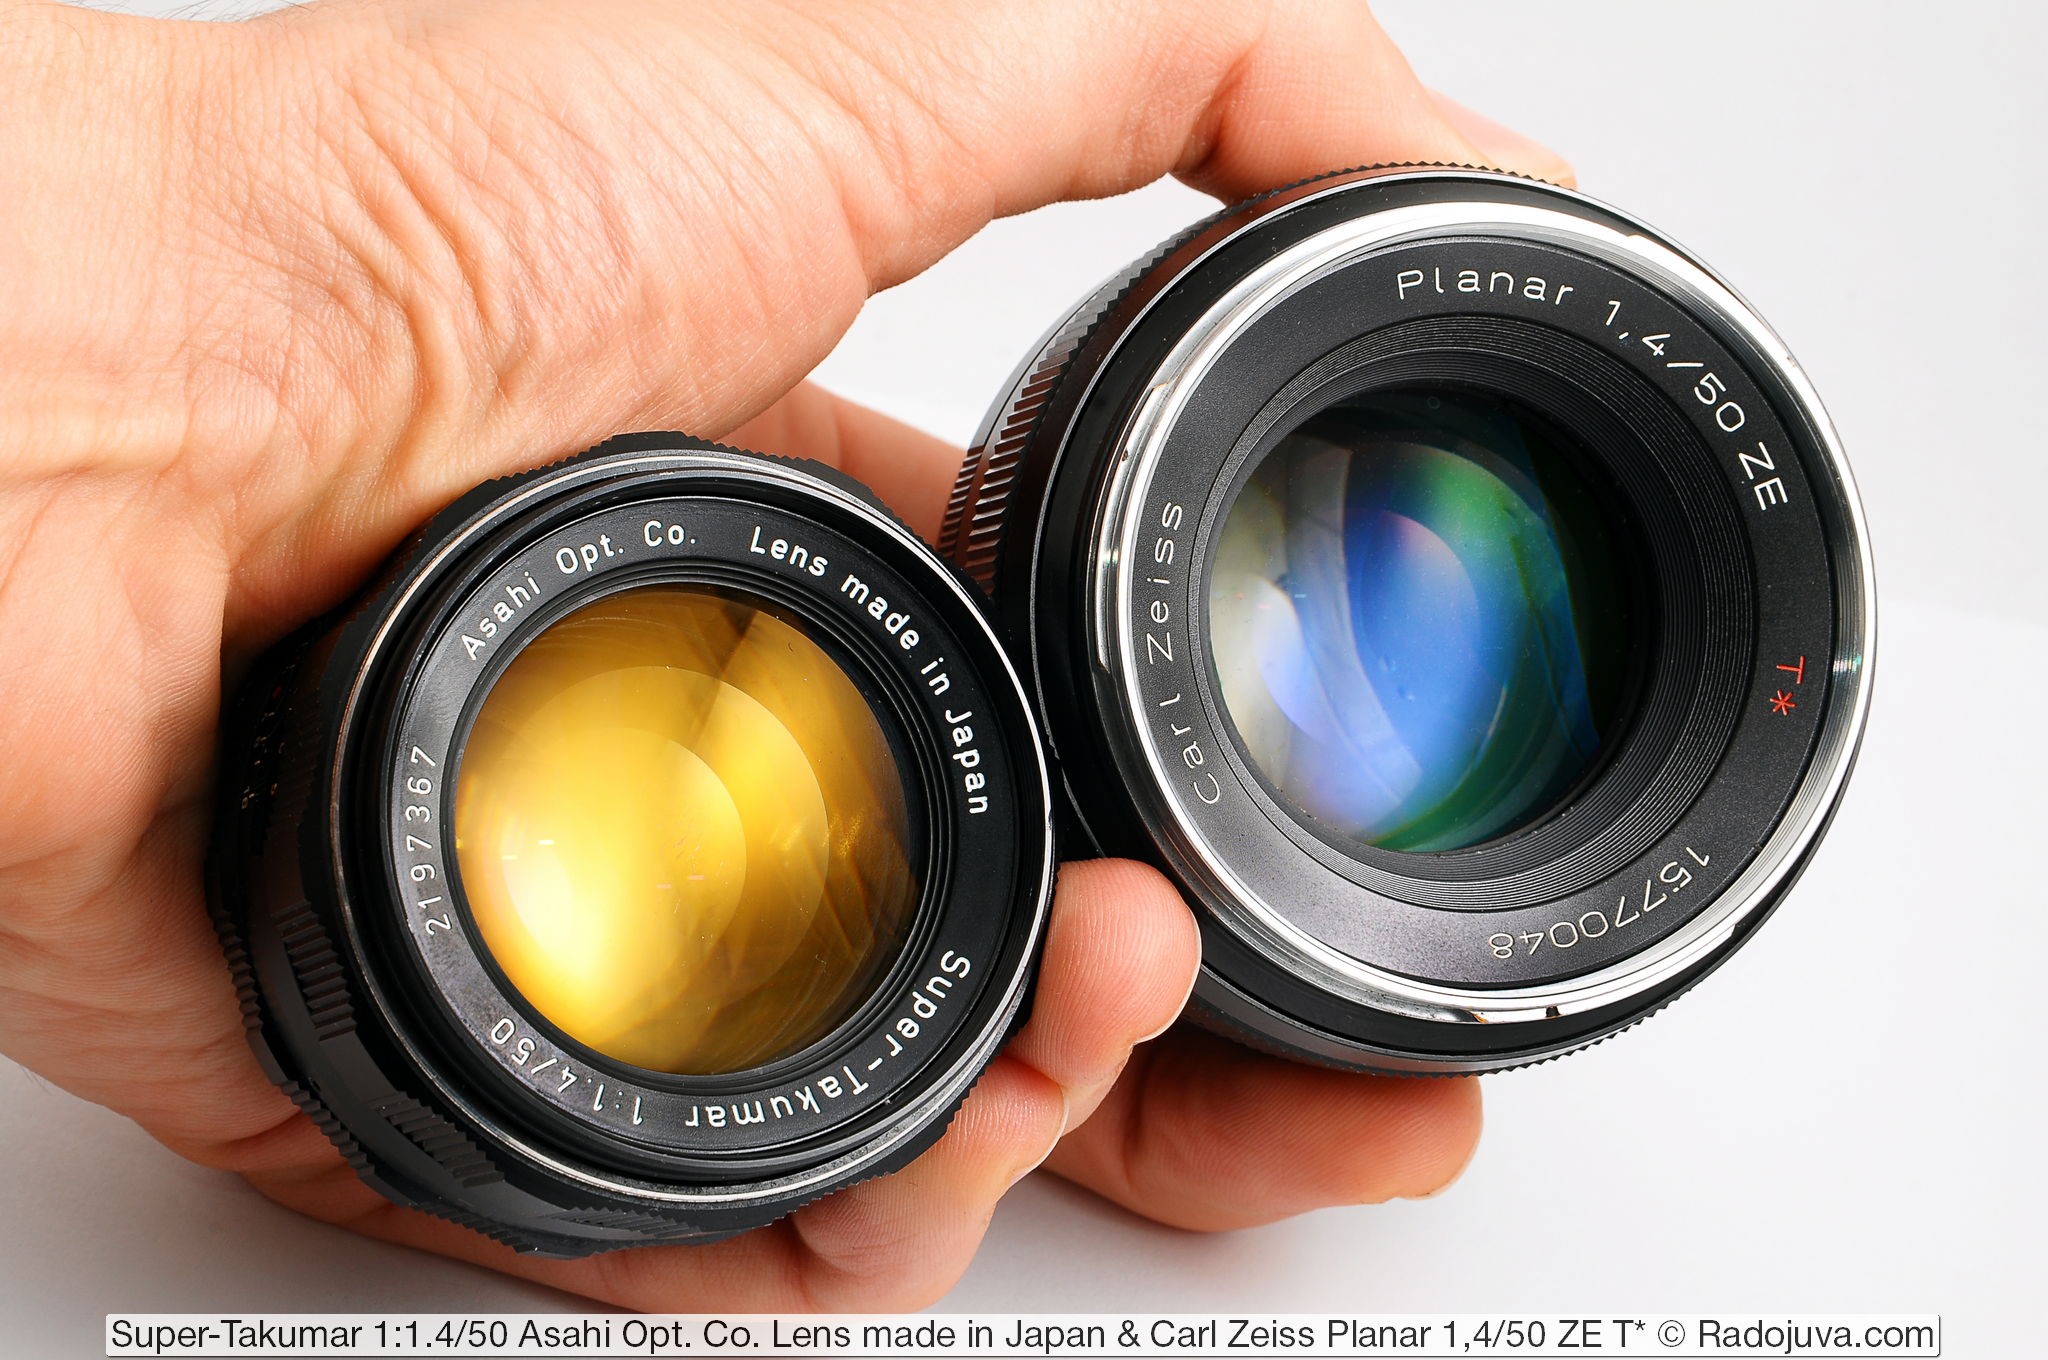 Размеры объективов Super-Takumar 1:1.4/50 Asahi Opt. Co. Lens made in Japan и Carl Zeiss Planar 1,4/50 ZE T*